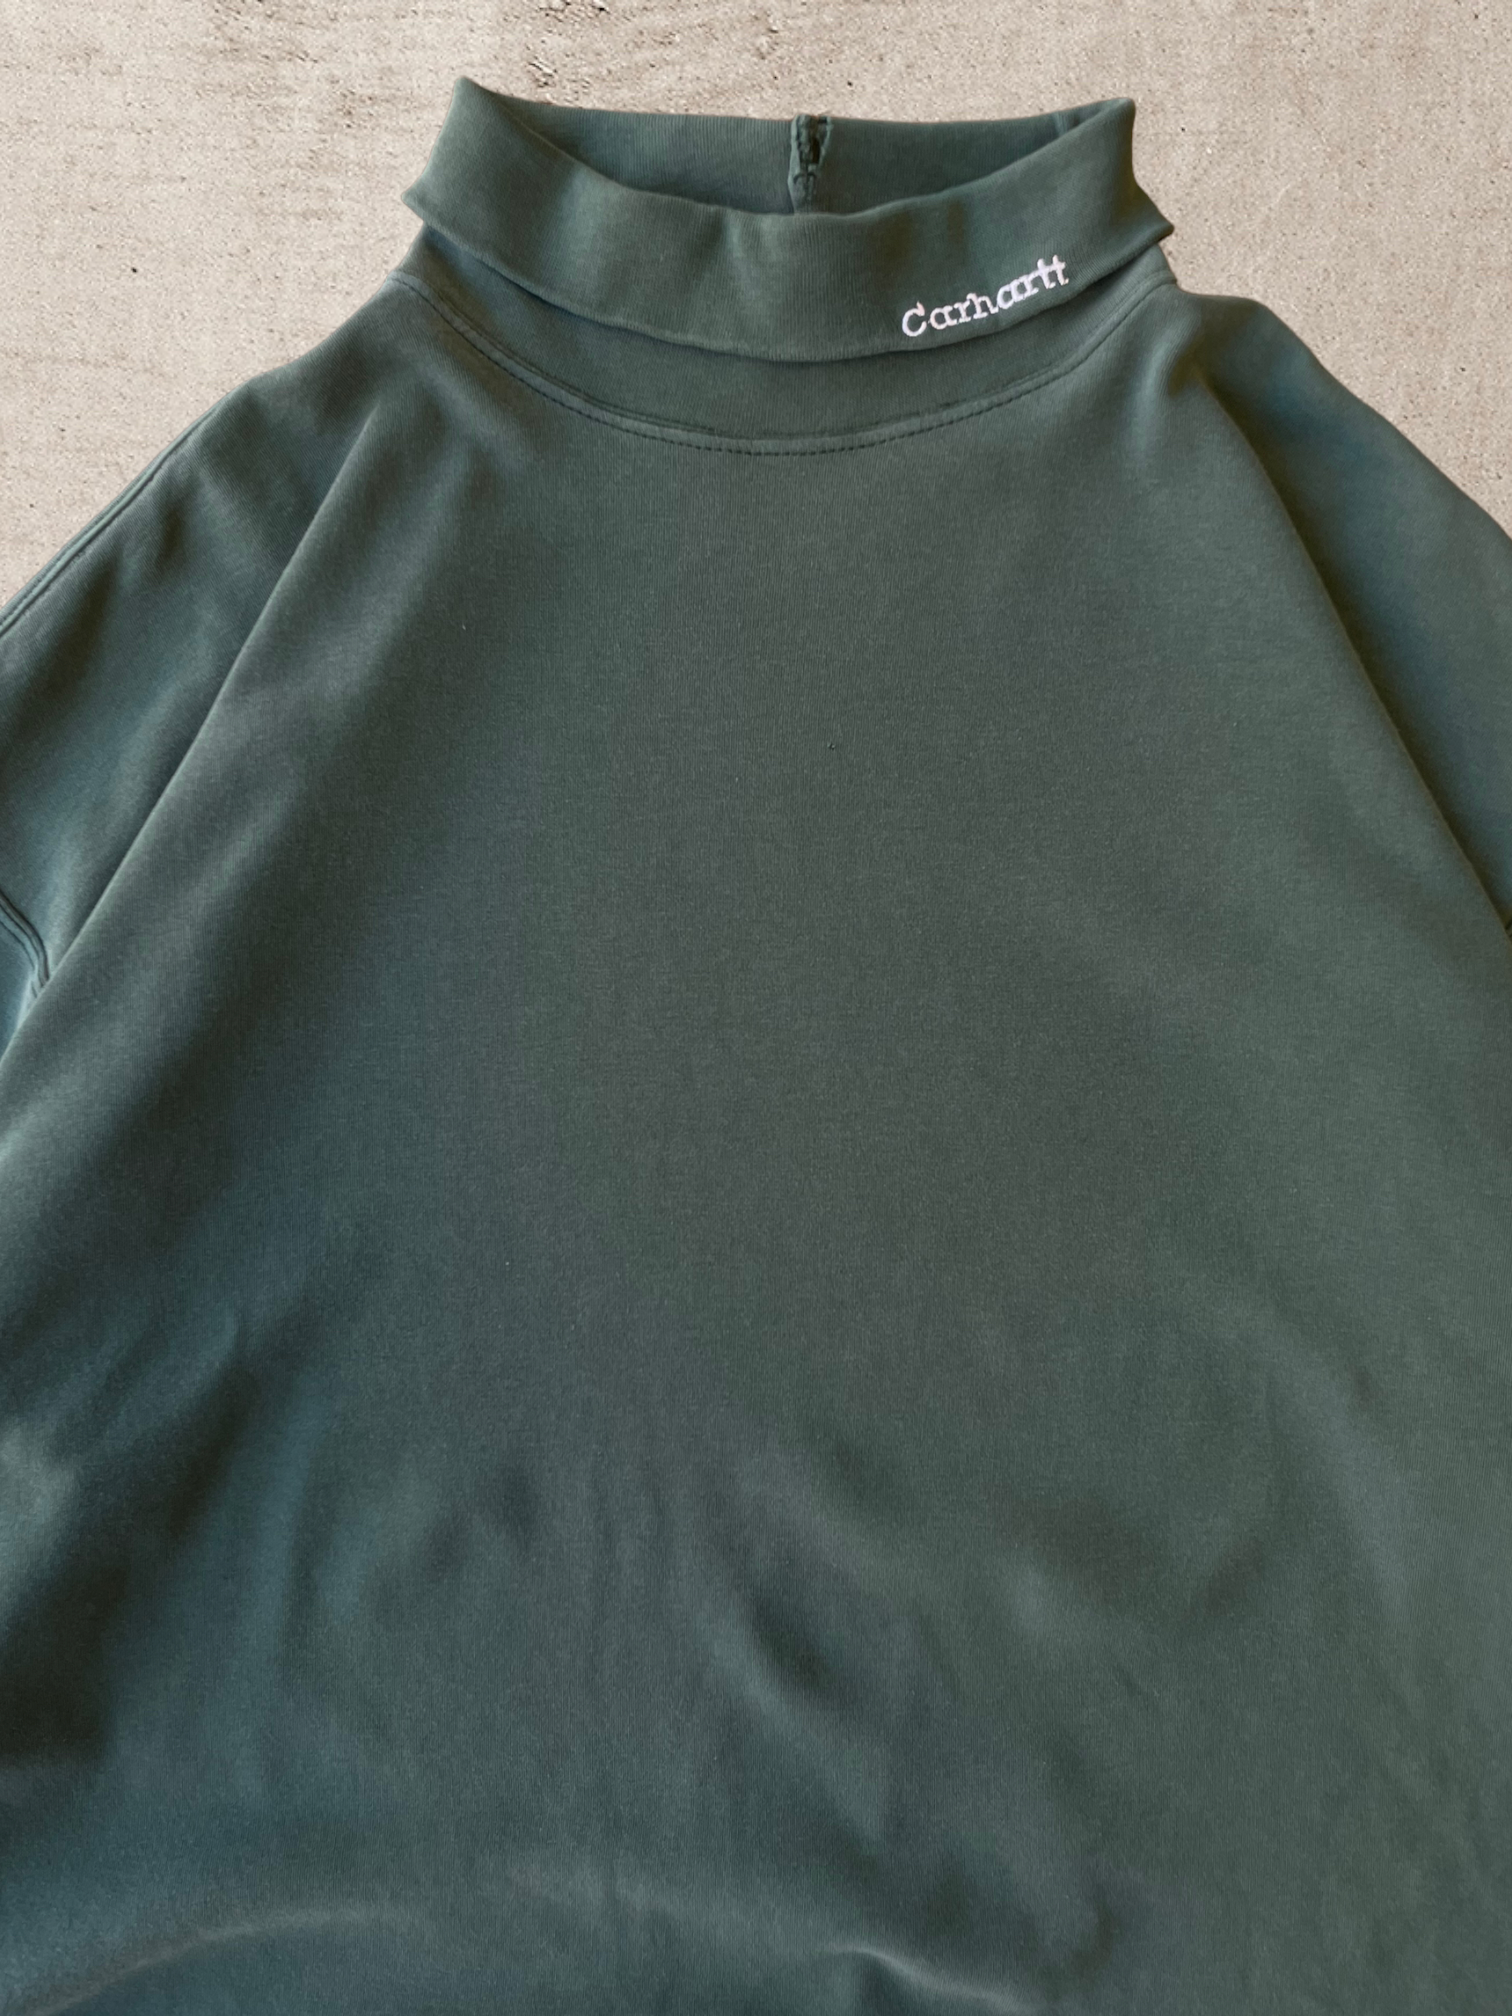 Vintage Carhartt Green Turtle Neck T-Shirt - XL